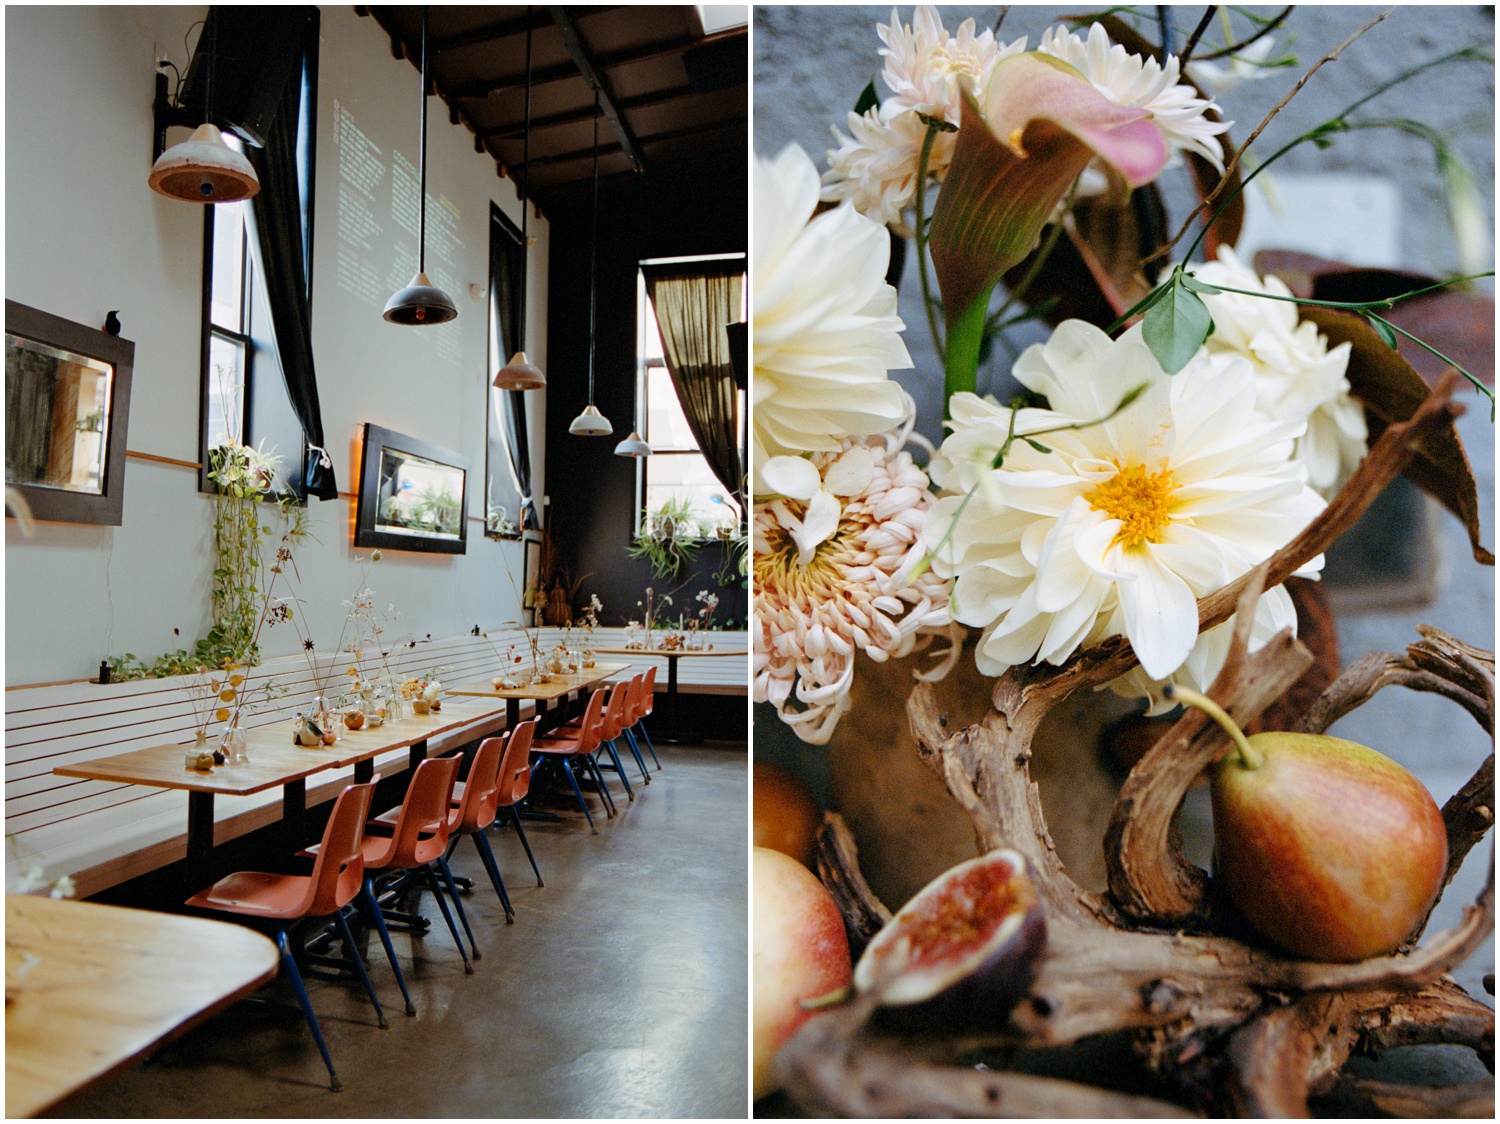 Martha Philadelphia's charming restaurant featuring flower arrangements by Bird Seed Florals.